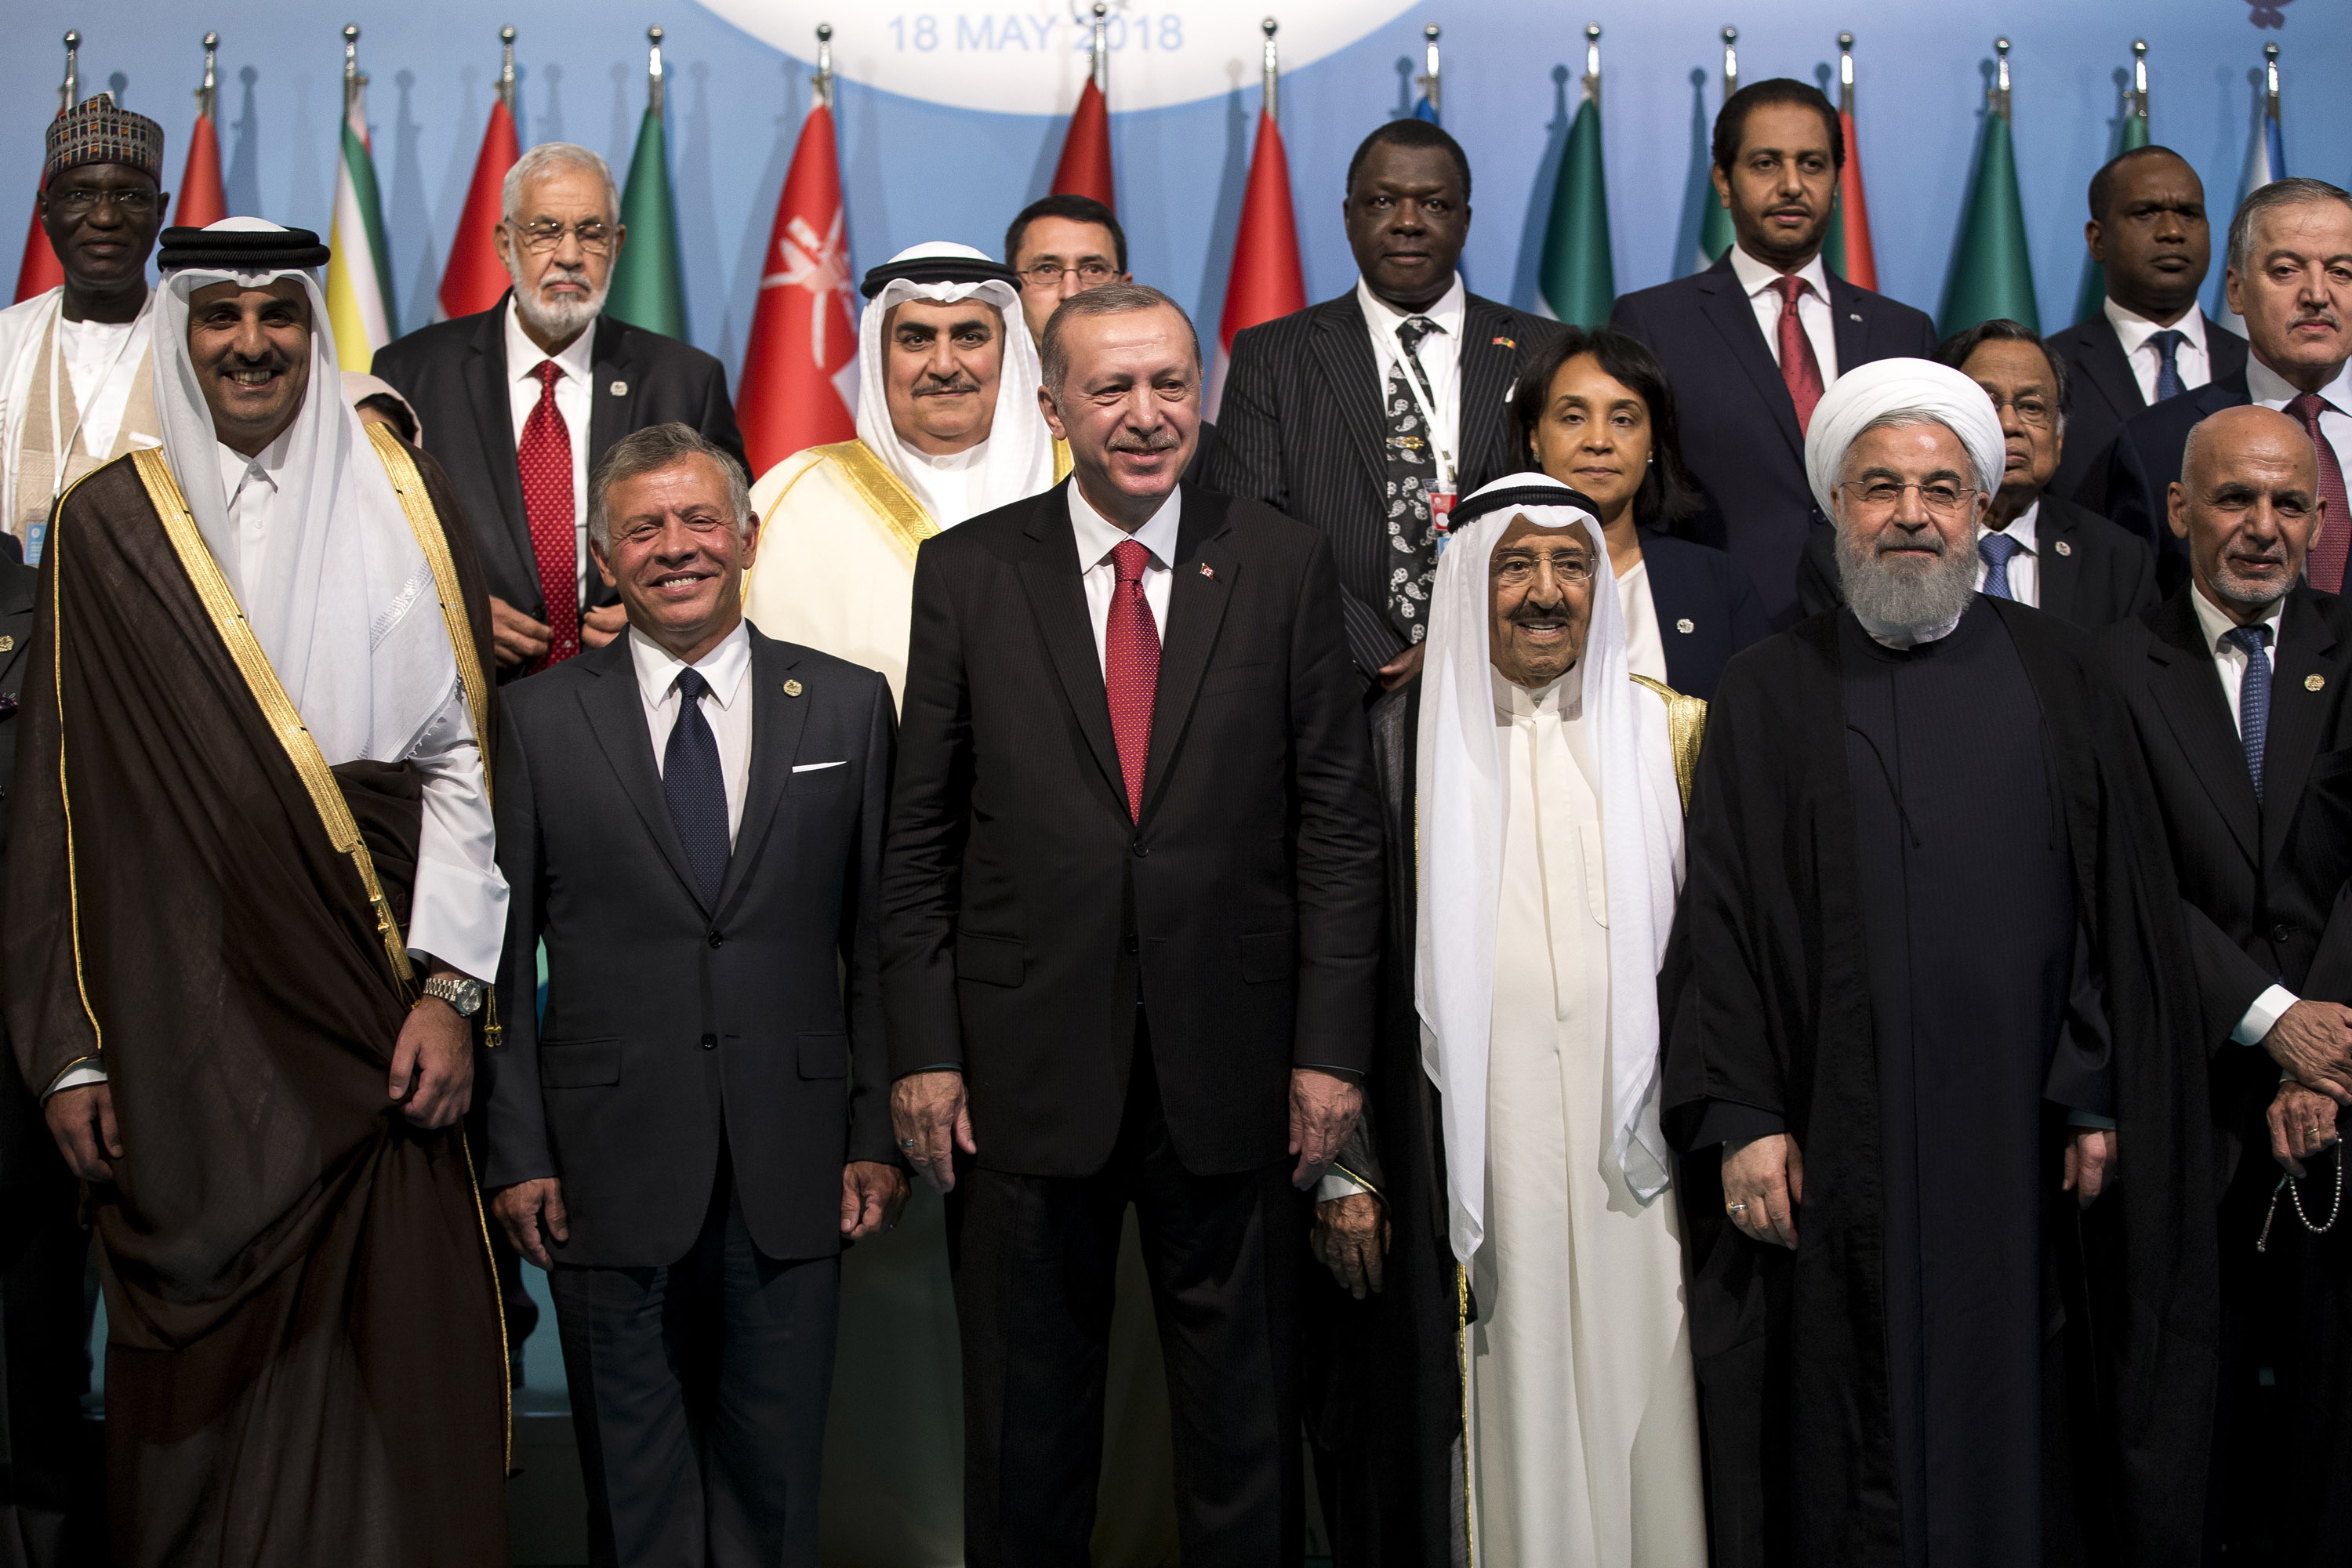 ISTANBUL, TURKEY - MAY 18: Turkish President Recep Tayyip Erdogan (C), Qatari Emir Sheikh Tamim bin Hamad al-Thani (L), Jordanian King Abdullah II (L2), President of Iran Hassan Rouhani (R2), Kuwaiti Emir Sheikh Sabah Al-Ahmad Al-Jaber Al-Sabah (R3) pose